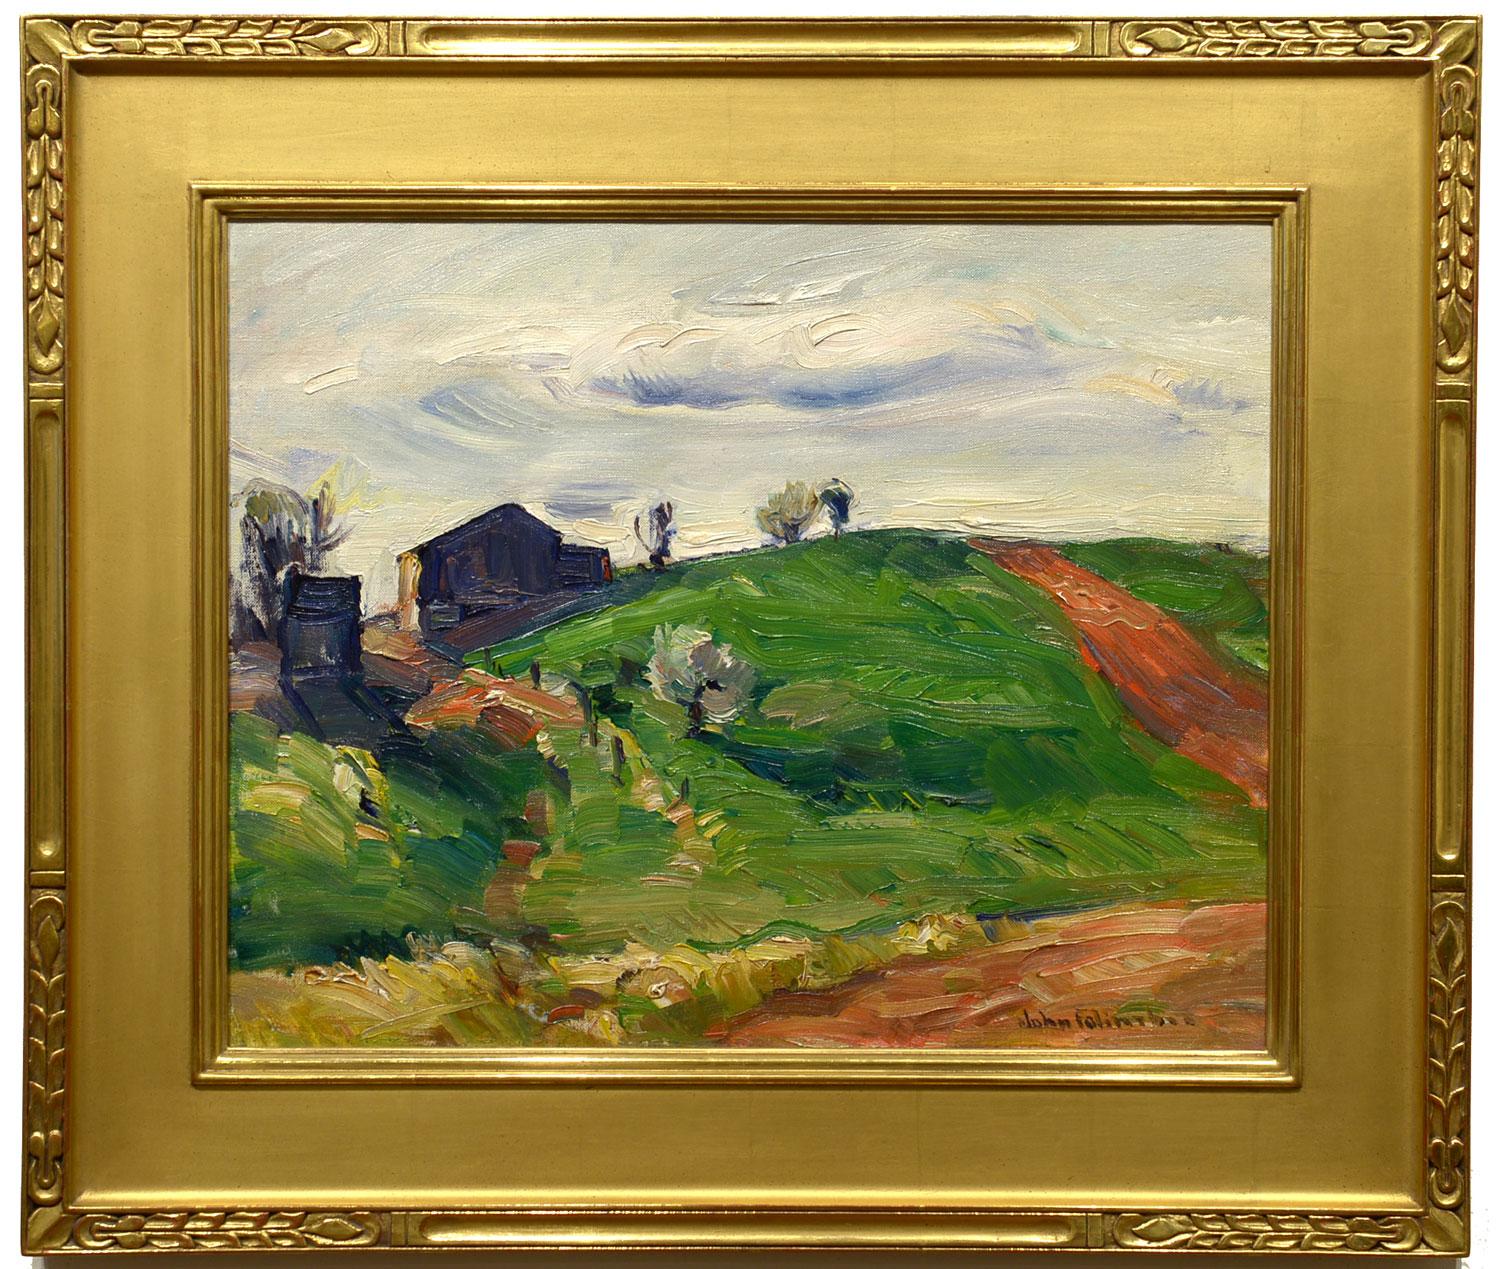 Sommerfarm, amerikanischer Impressionist, Öl, Landschaft, New Hope, Pennsylvania – Painting von John Fulton Folinsbee